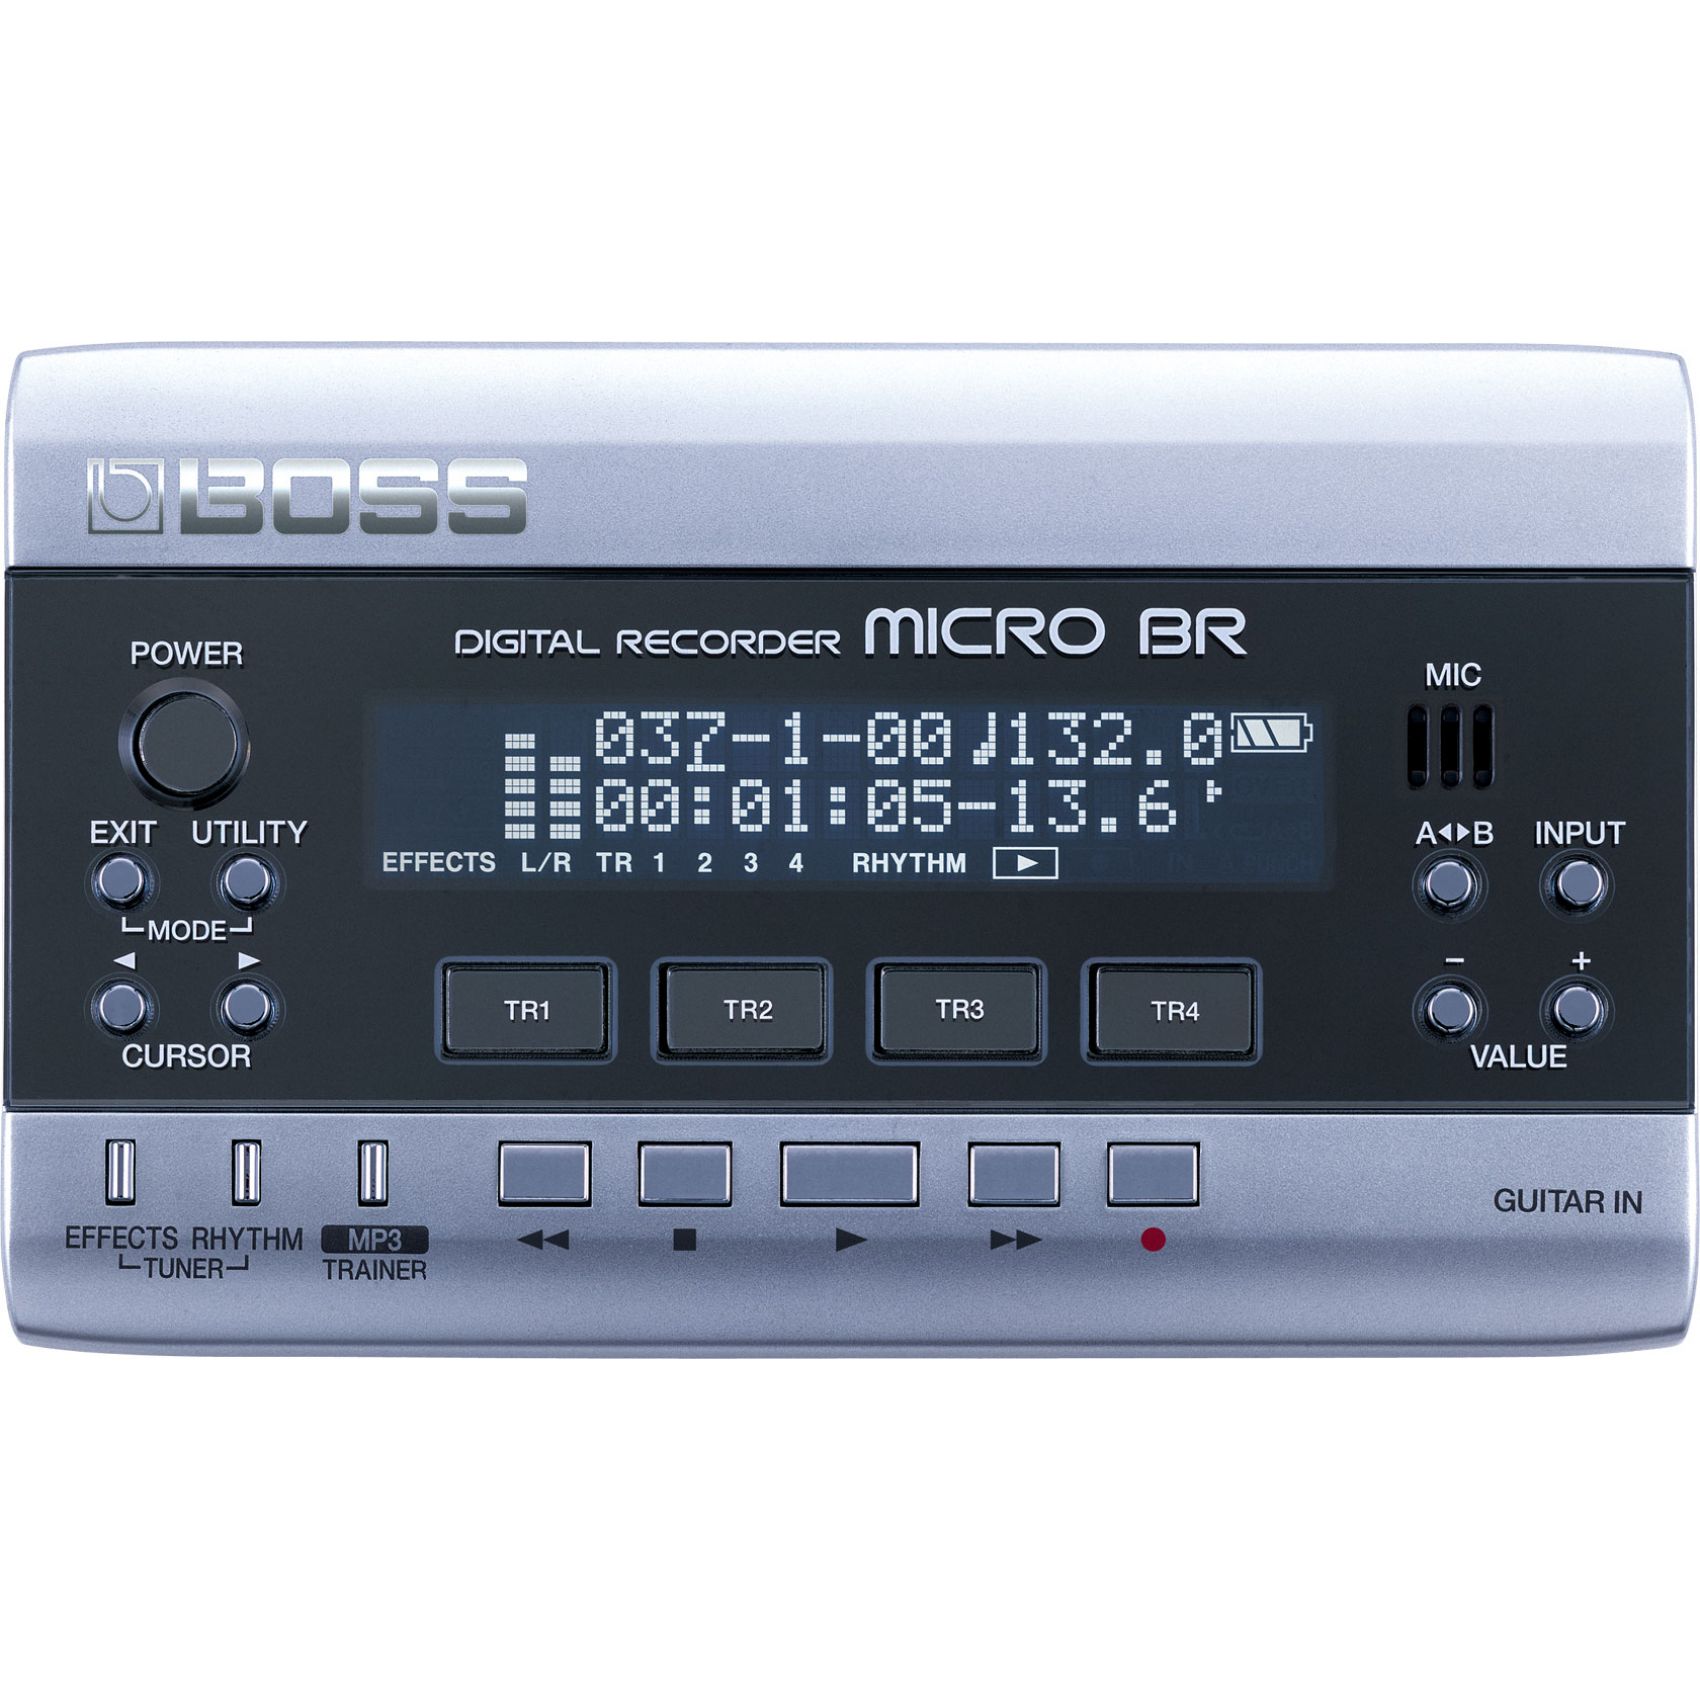 BOSS MICRO BR - MBR Registratore portatile digitale